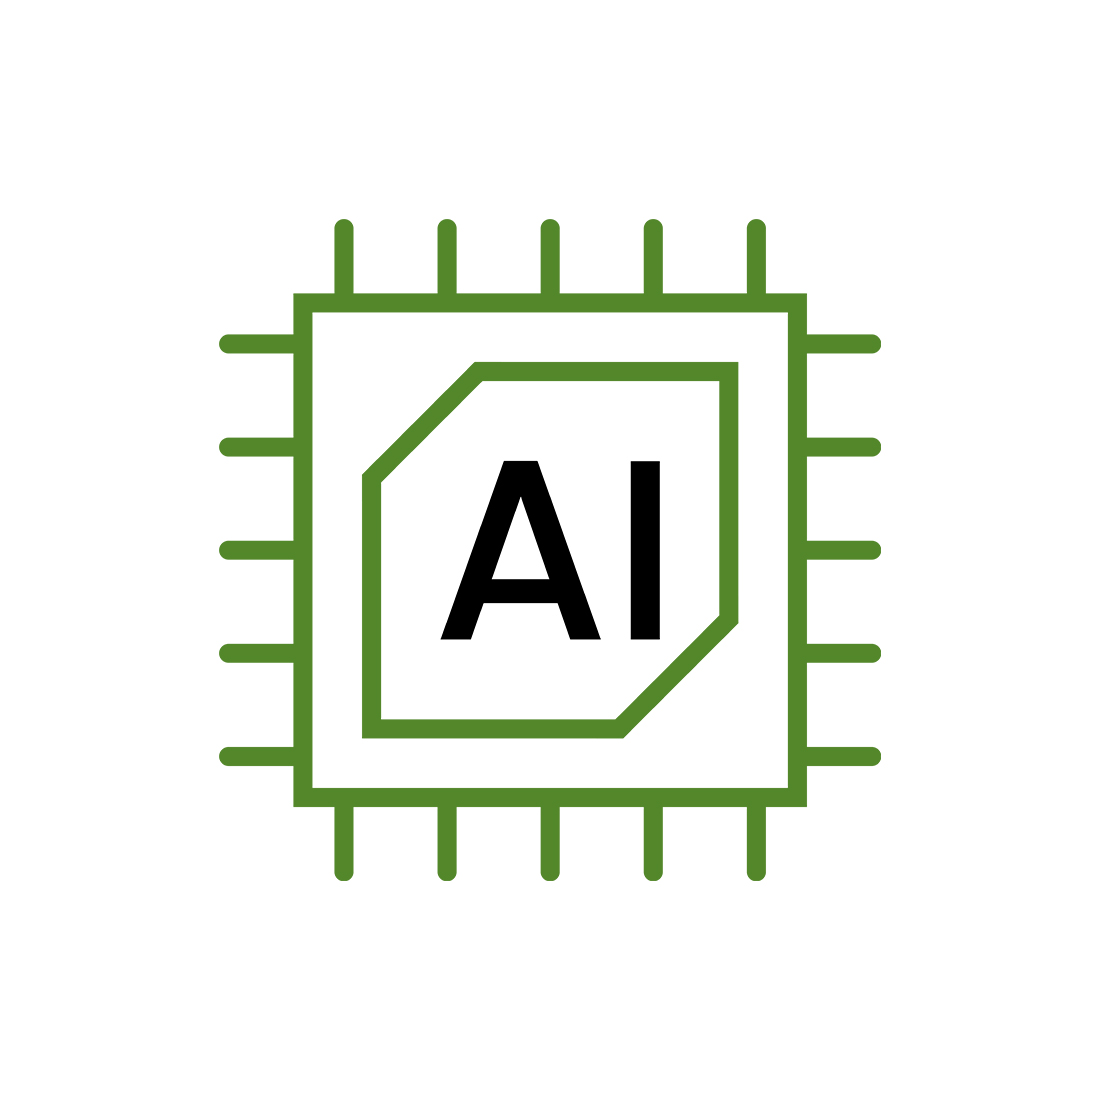 AI Minimal Tech Chip Logo Template preview image.